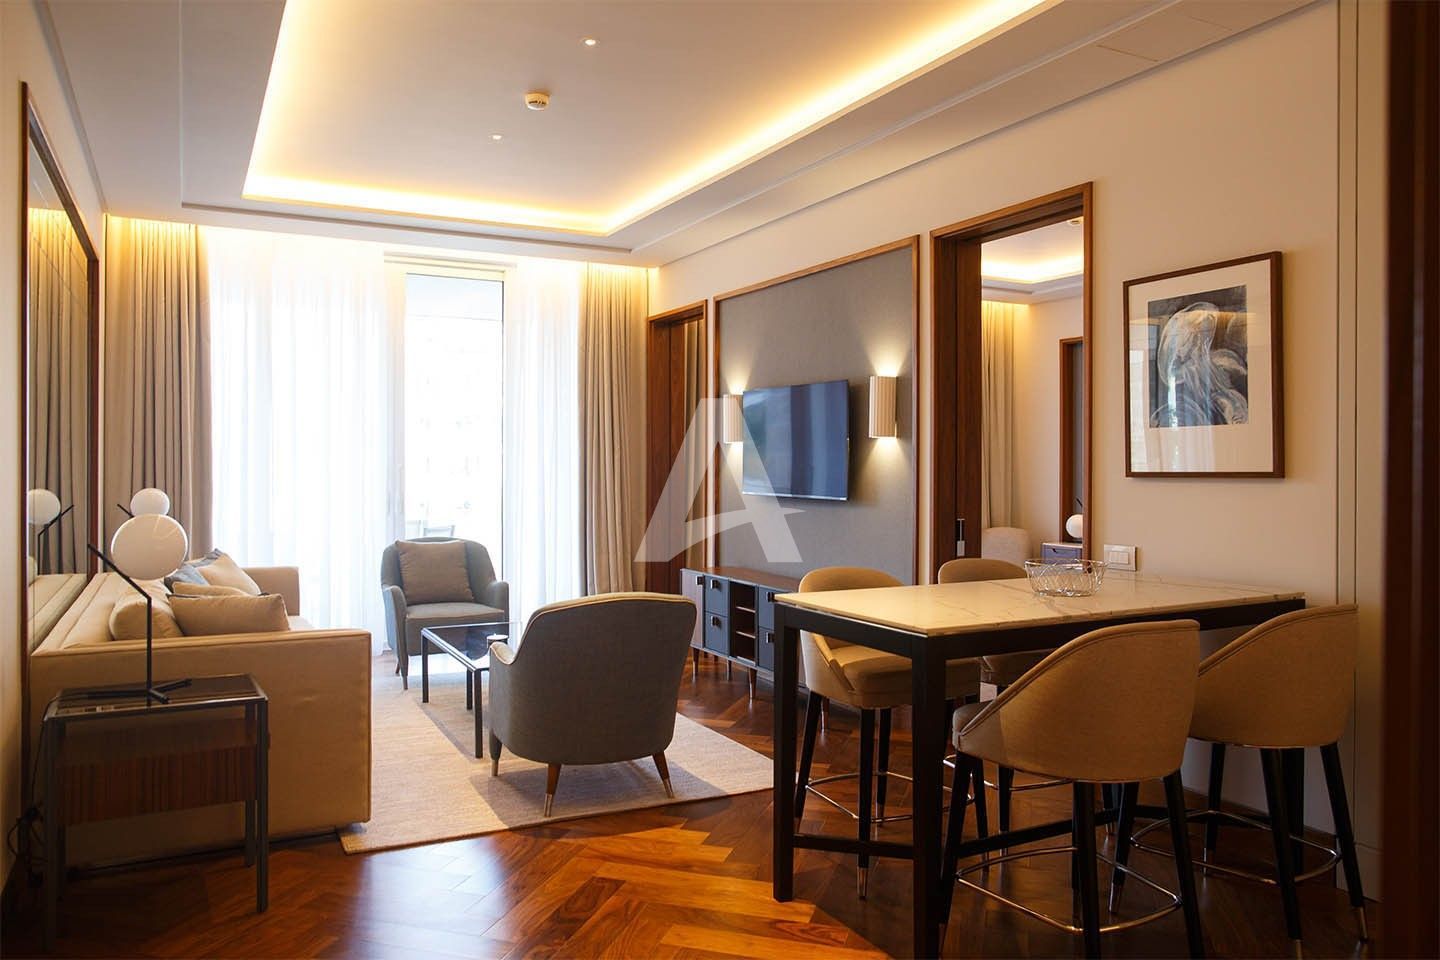 amfora/Luksuzan jednosoban stan 76m2 u hotelu Regent , Porto montenegro (NA DUZI PERIOD)